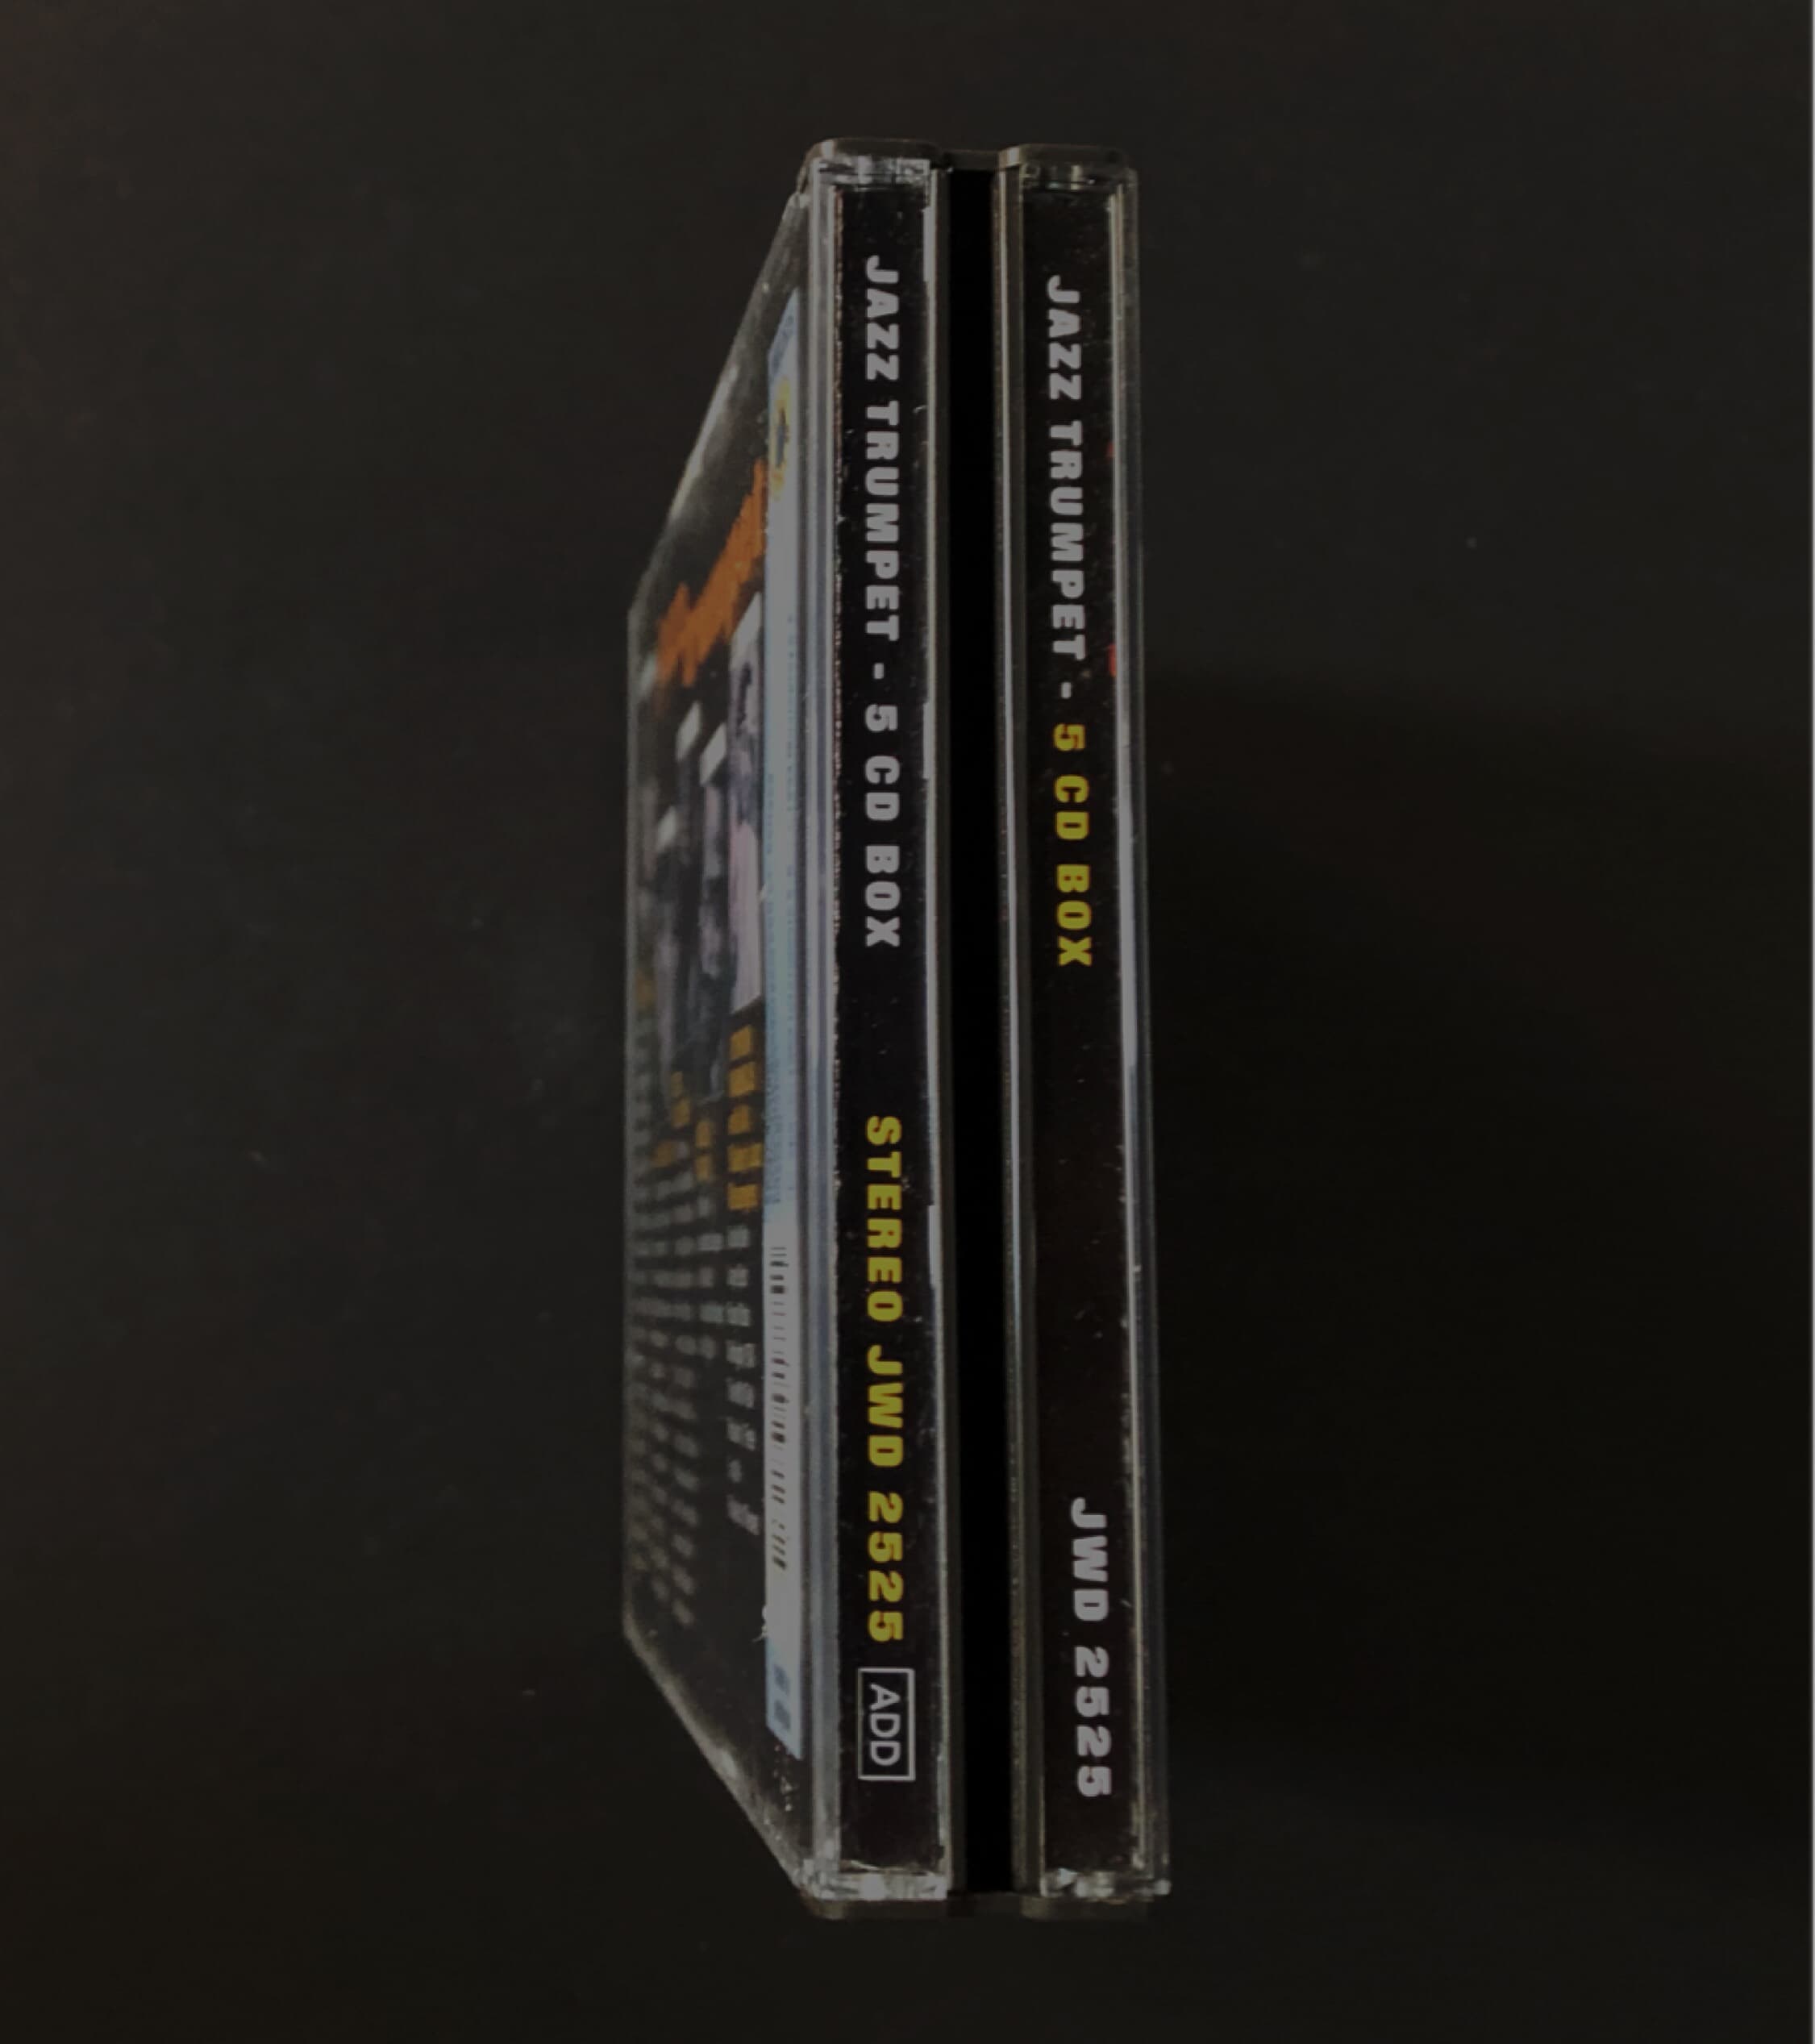 [CD] 수입반 JAZZ TRUMPET  5CD BOX (유럽반)